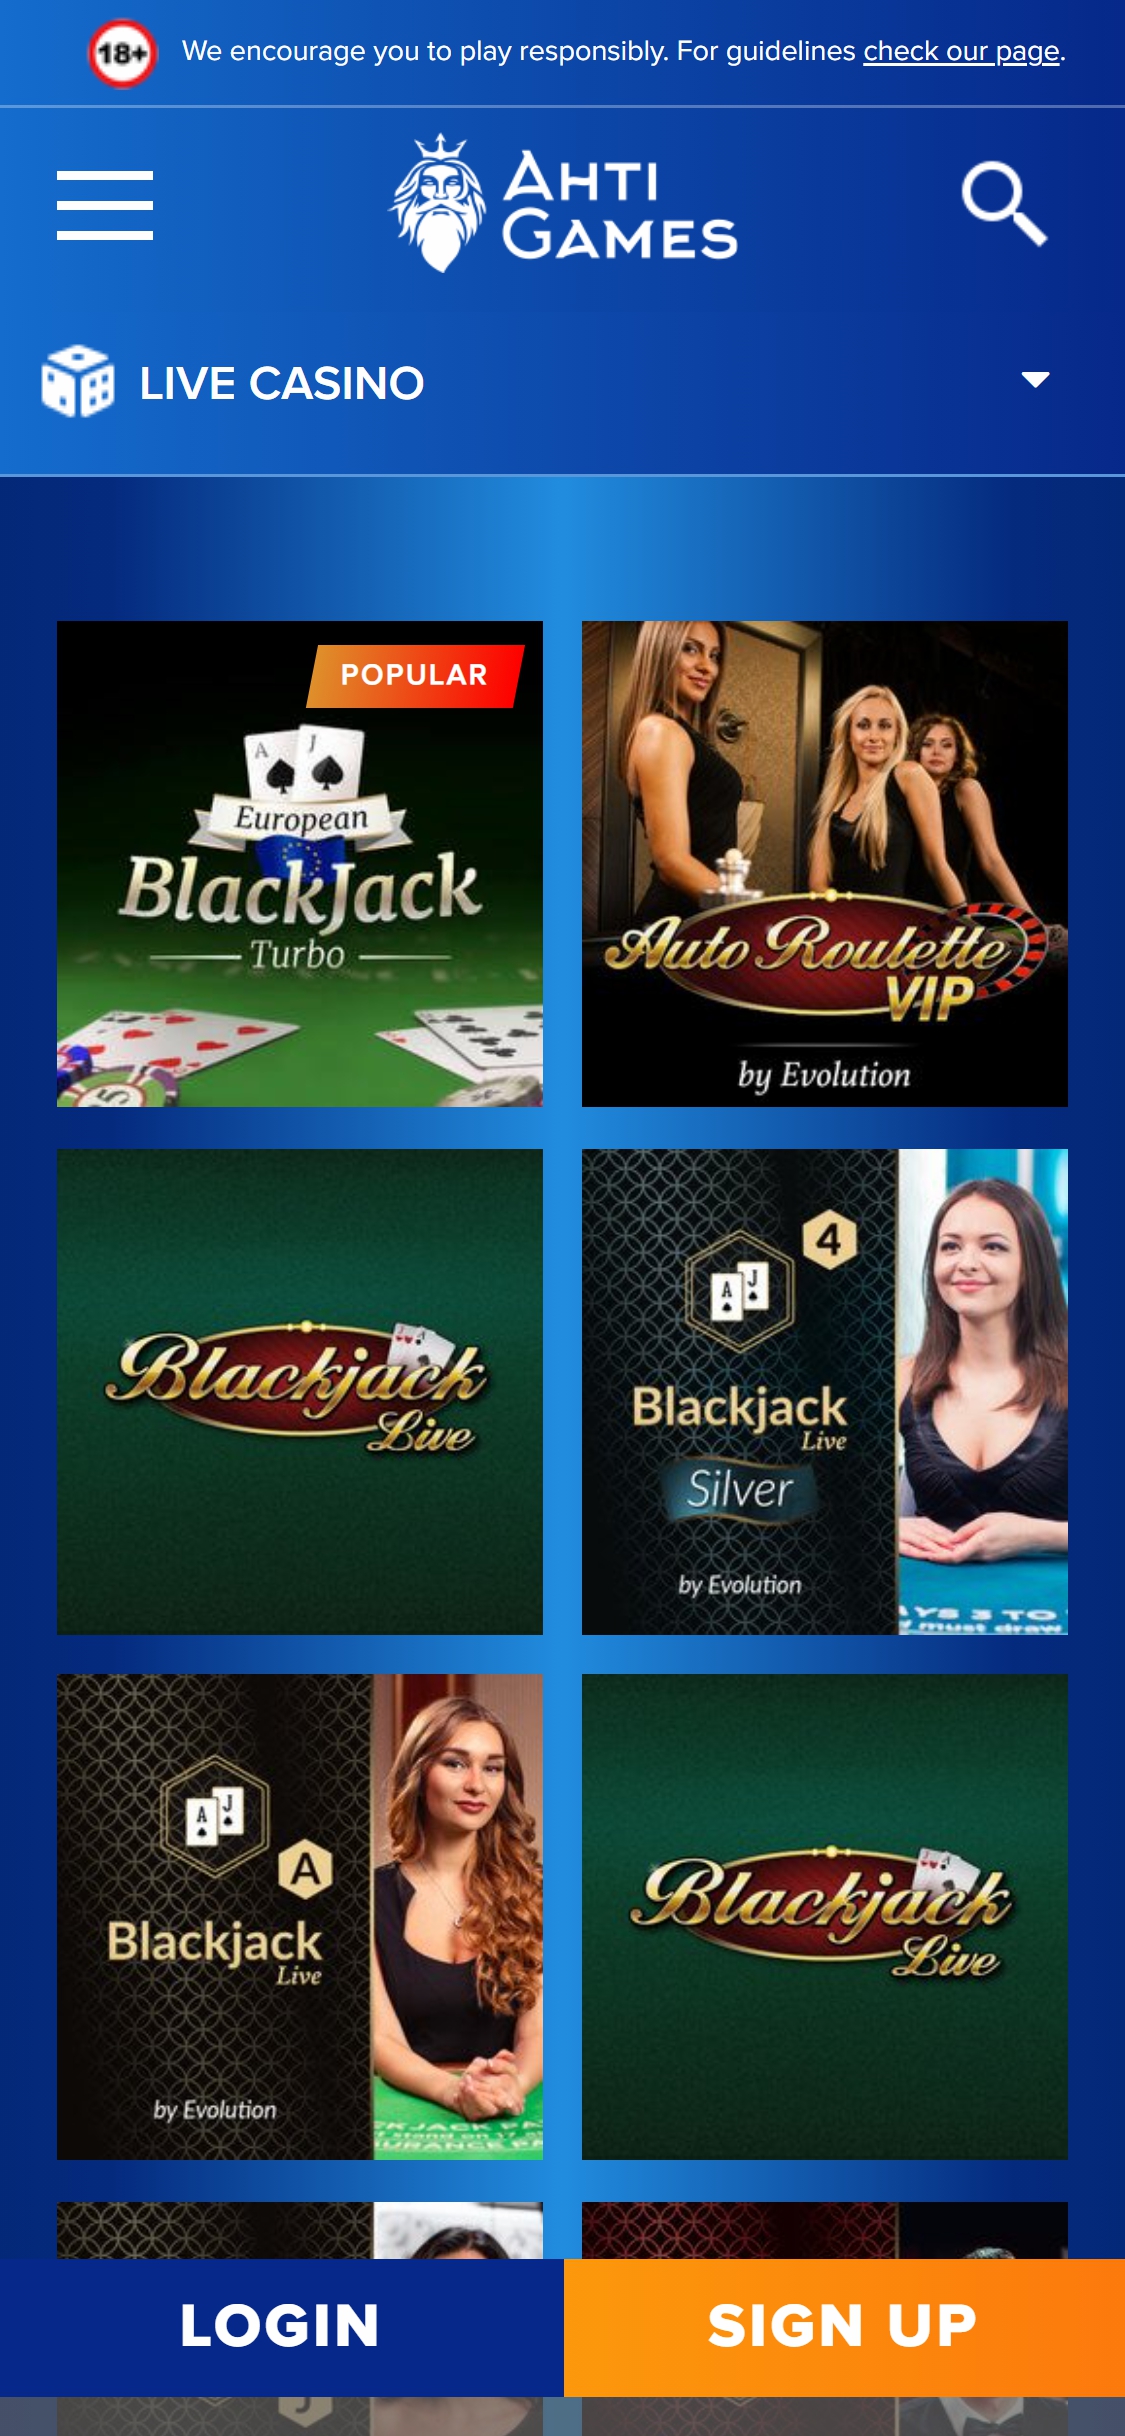 AHTI Casino Mobile Live Dealer Games Review